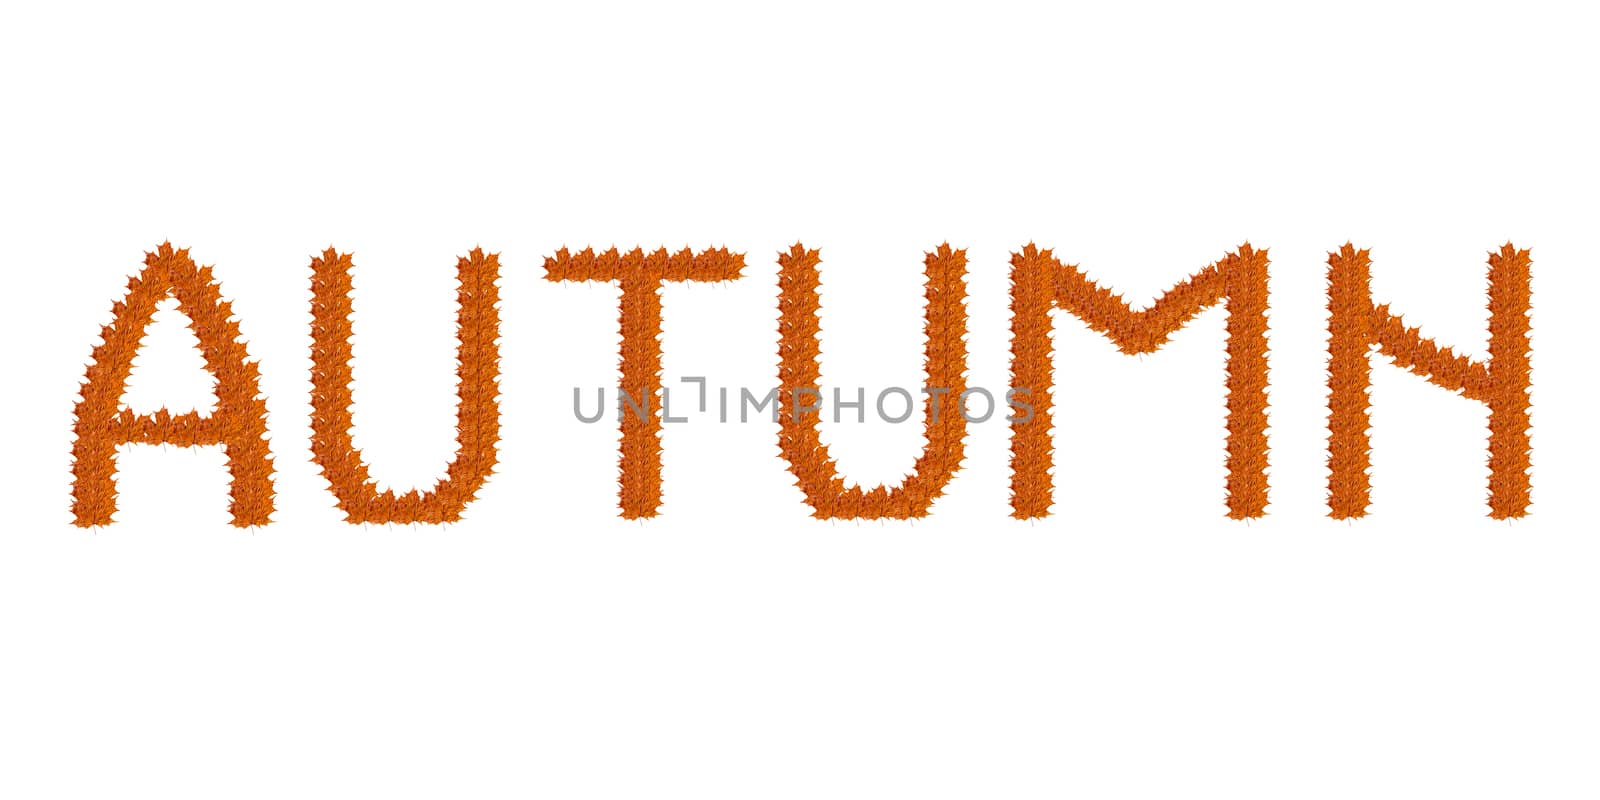 inscription Autumn on the autumn leaves by alexmak